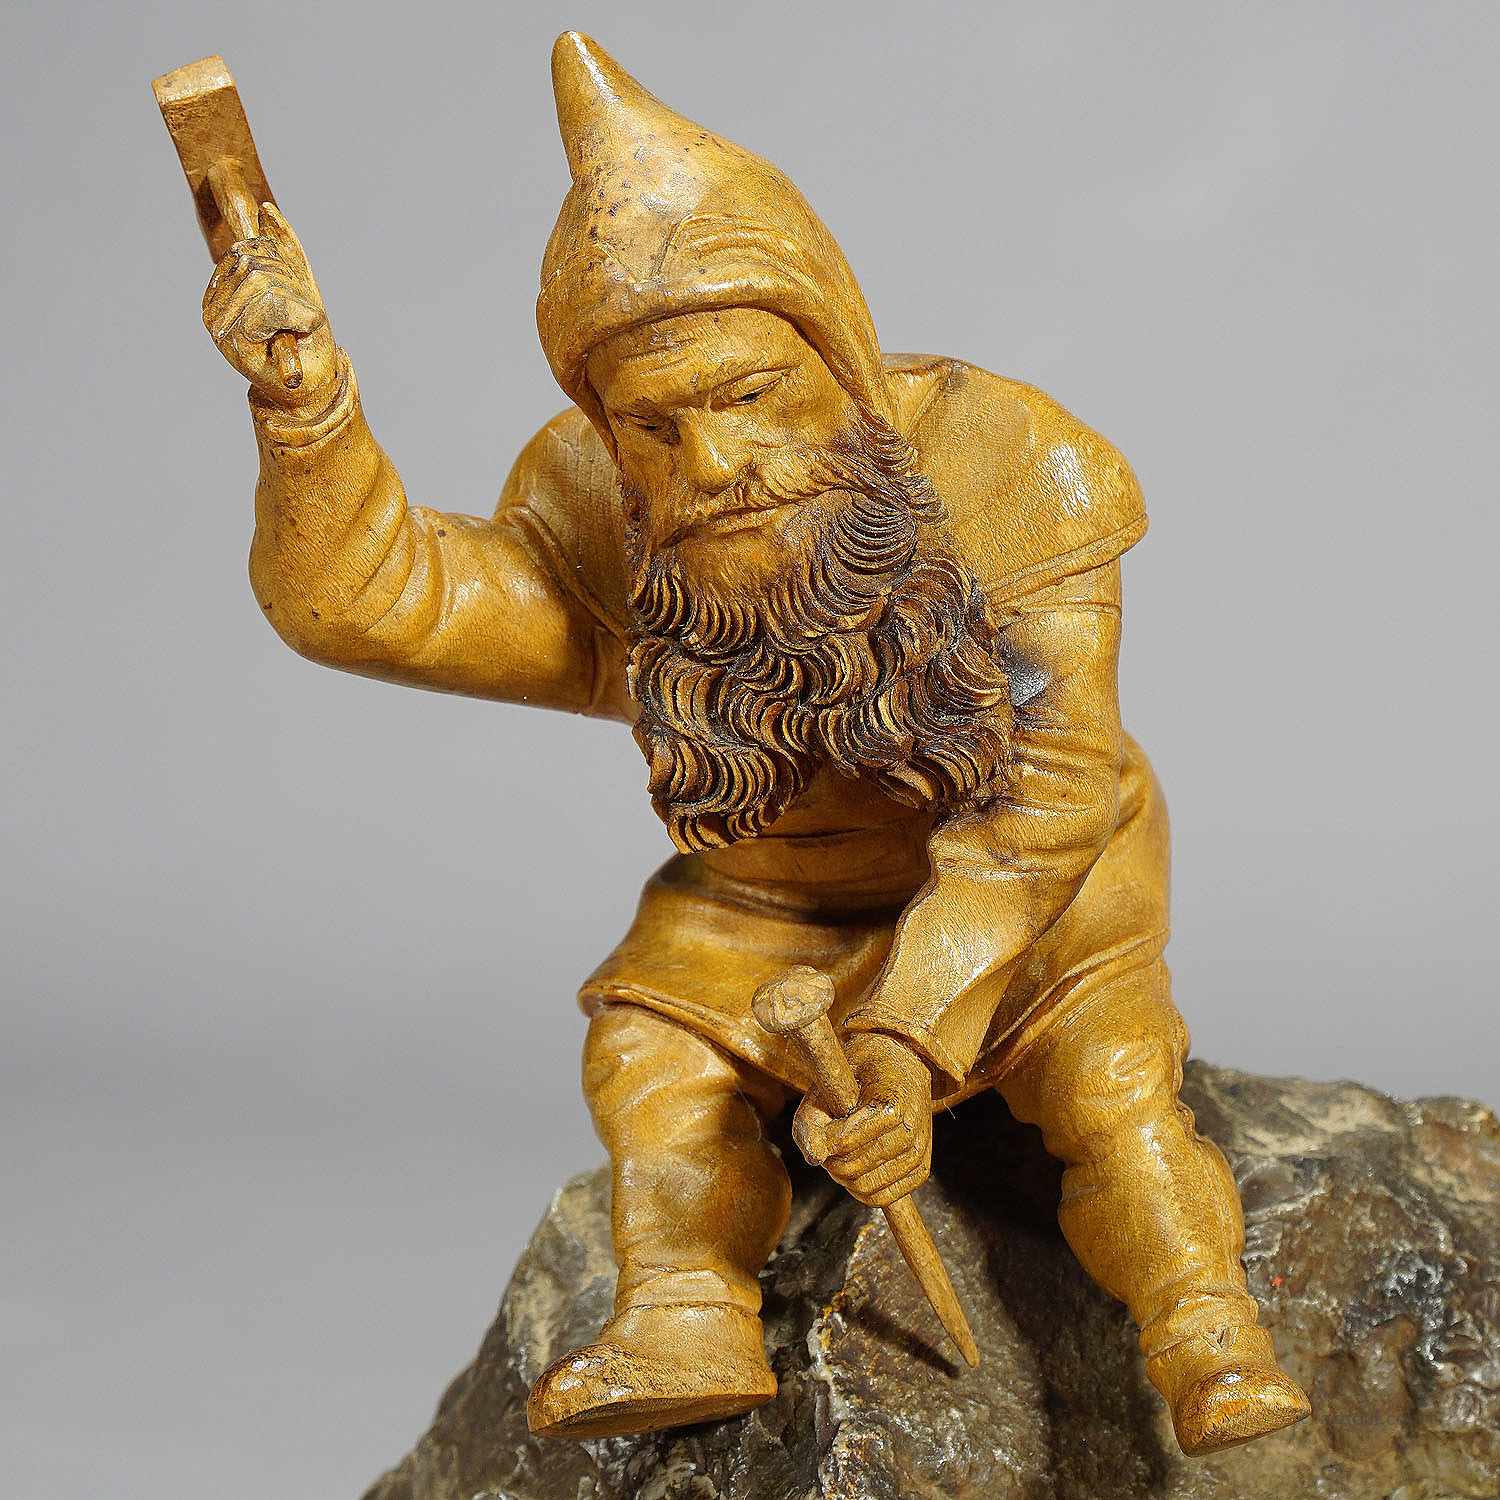 Wooden Carved Black Forest Dwarf Sitting on a Rock